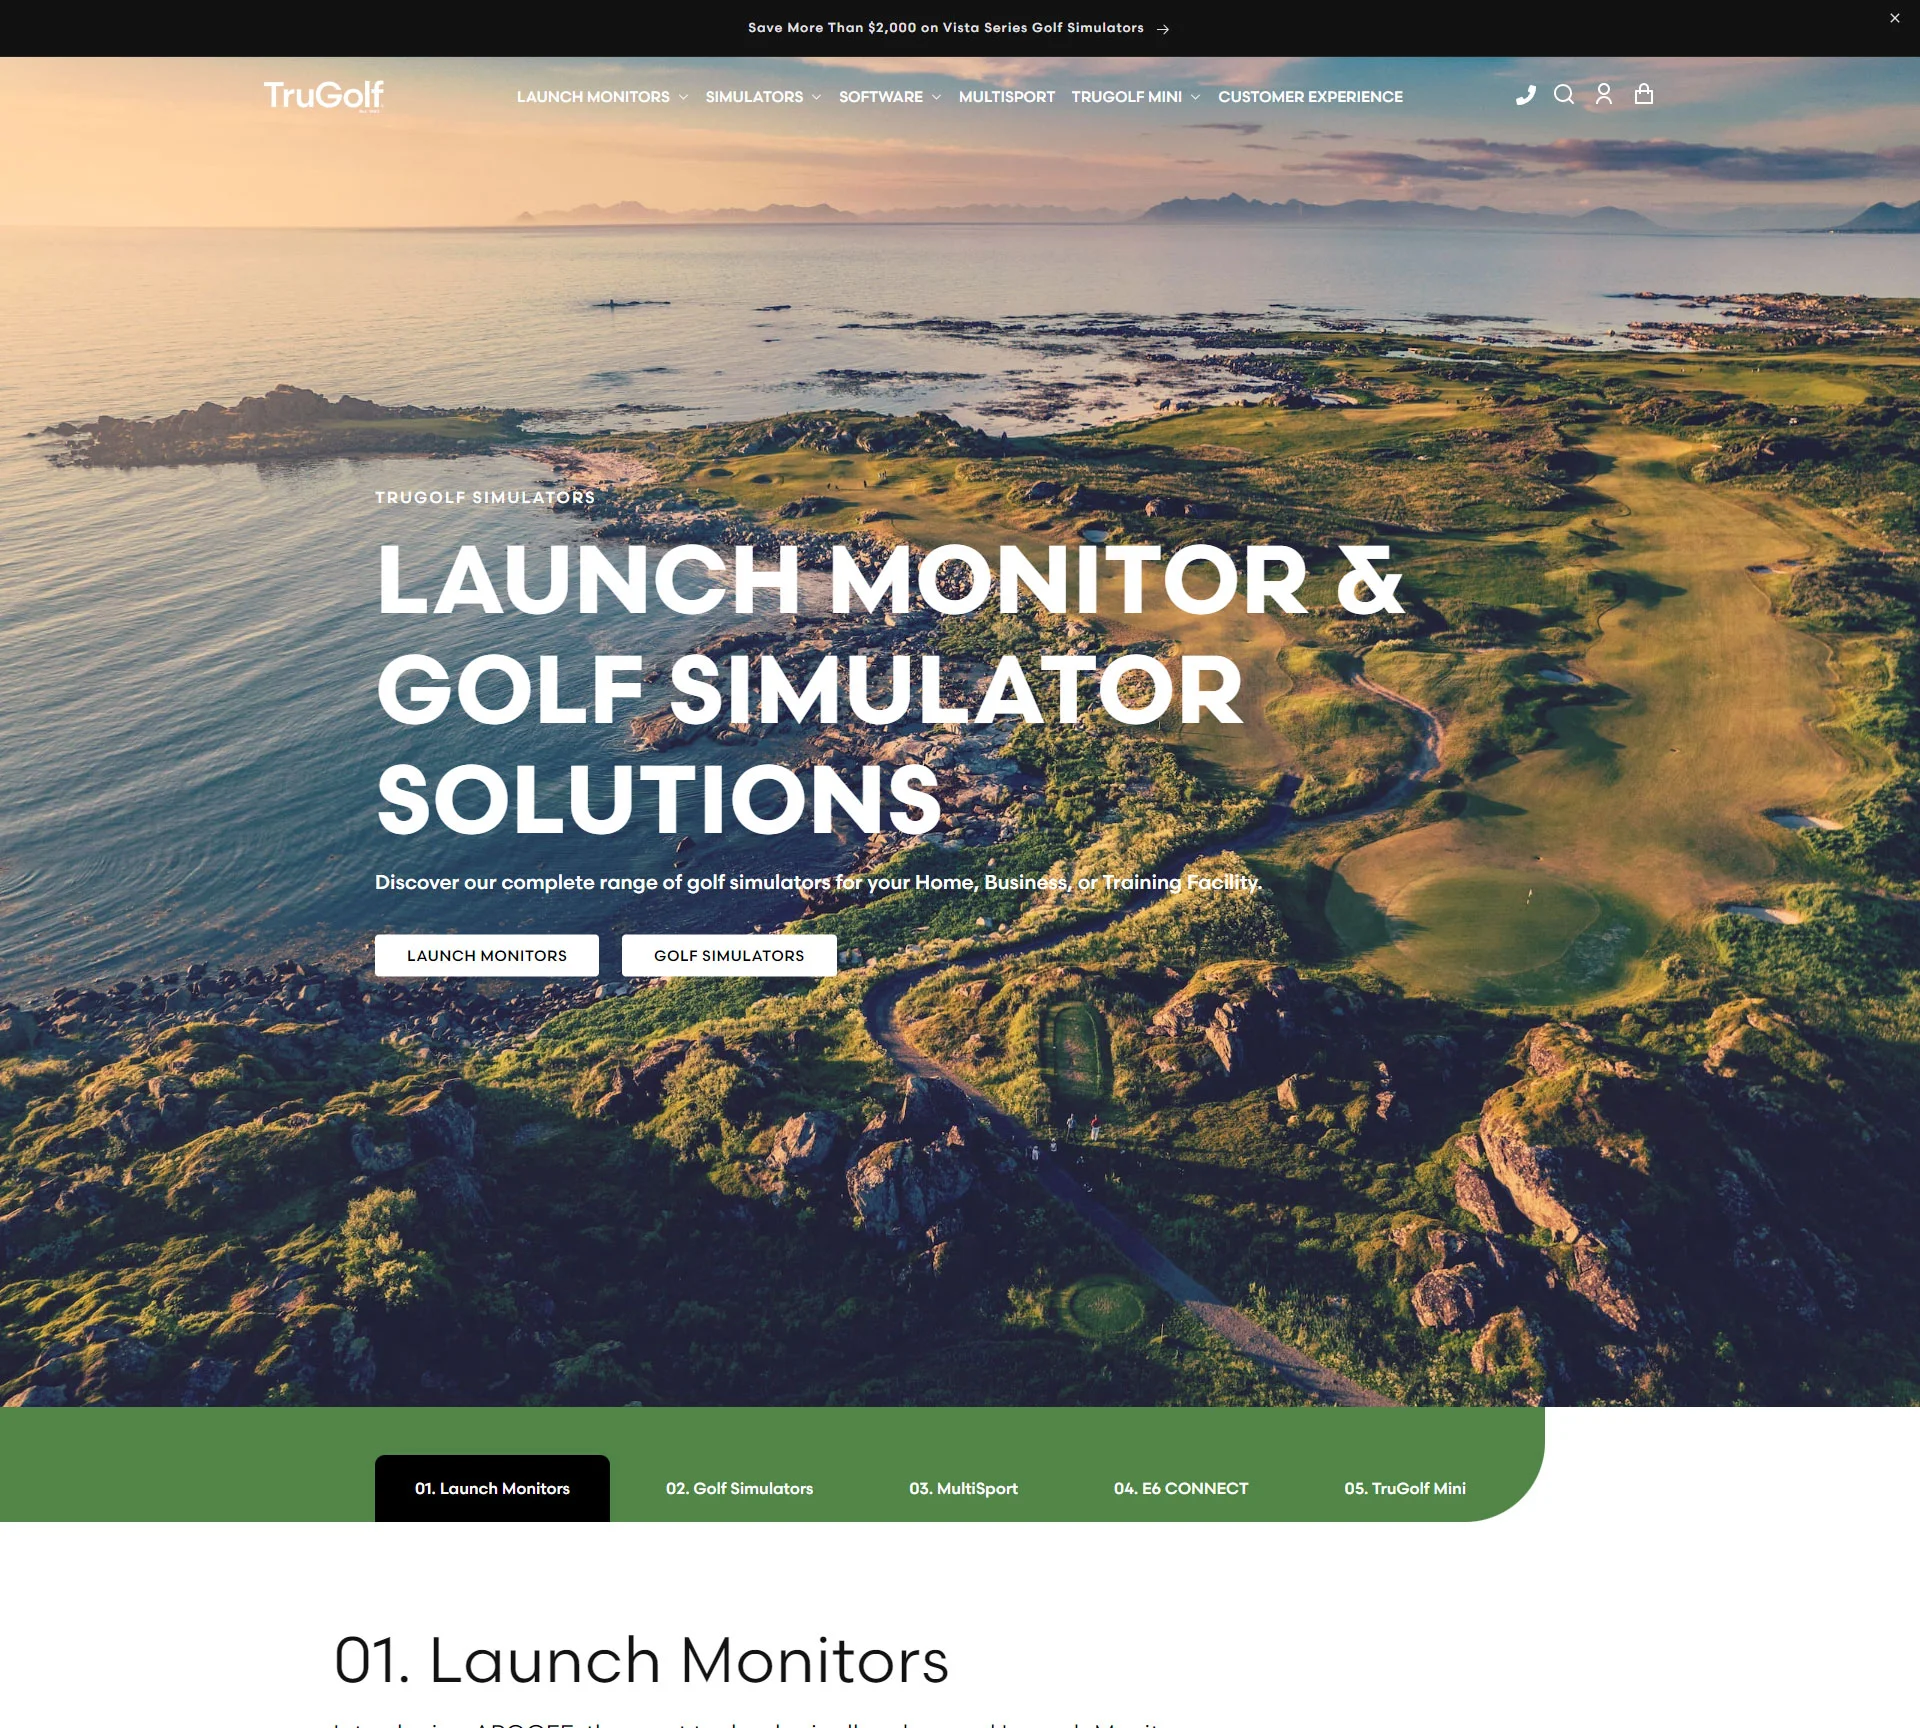 Tru Golf - shopify website development services